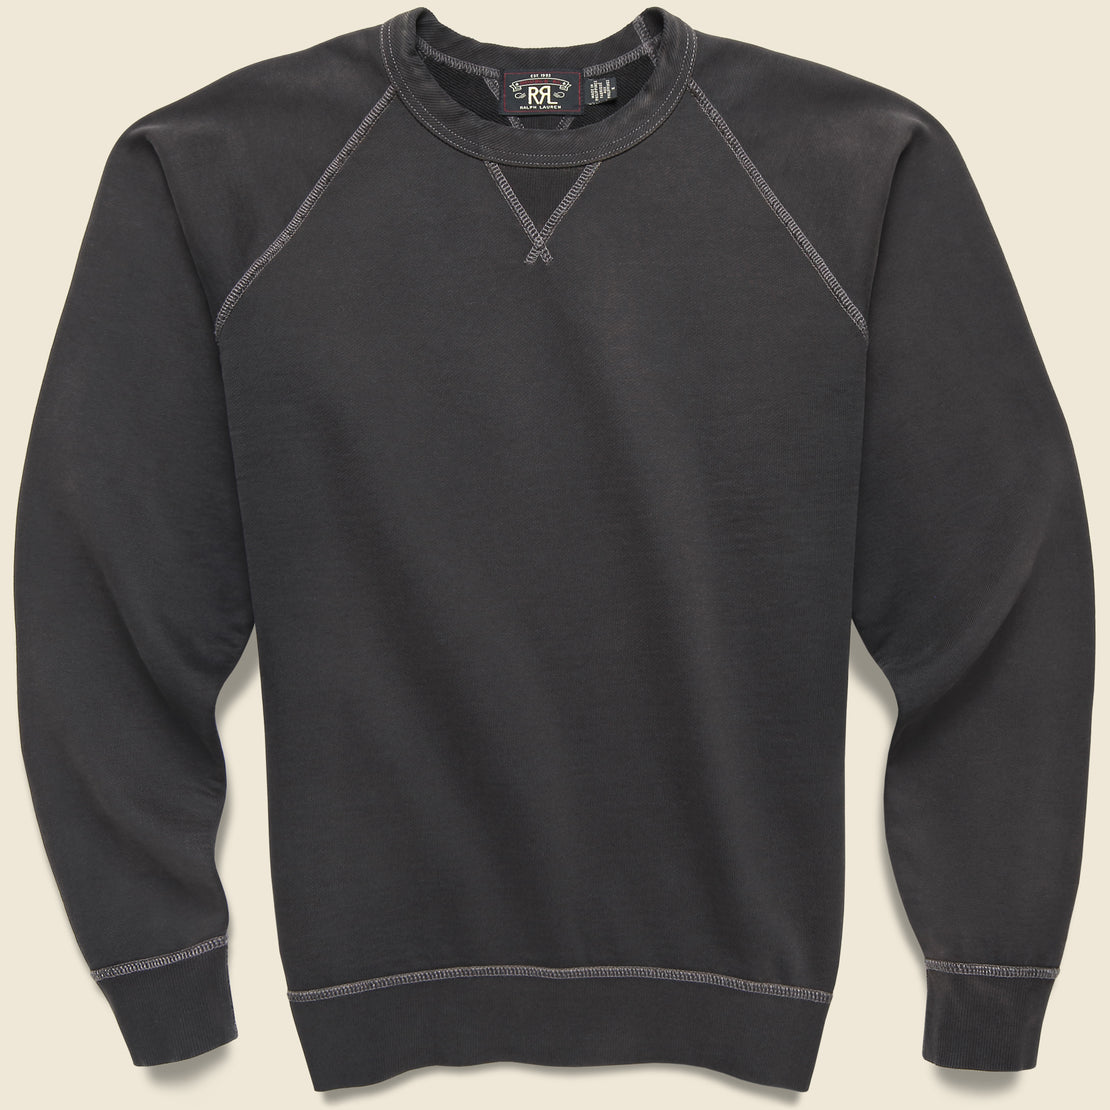 French Terry Sweatshirt - Black Indigo